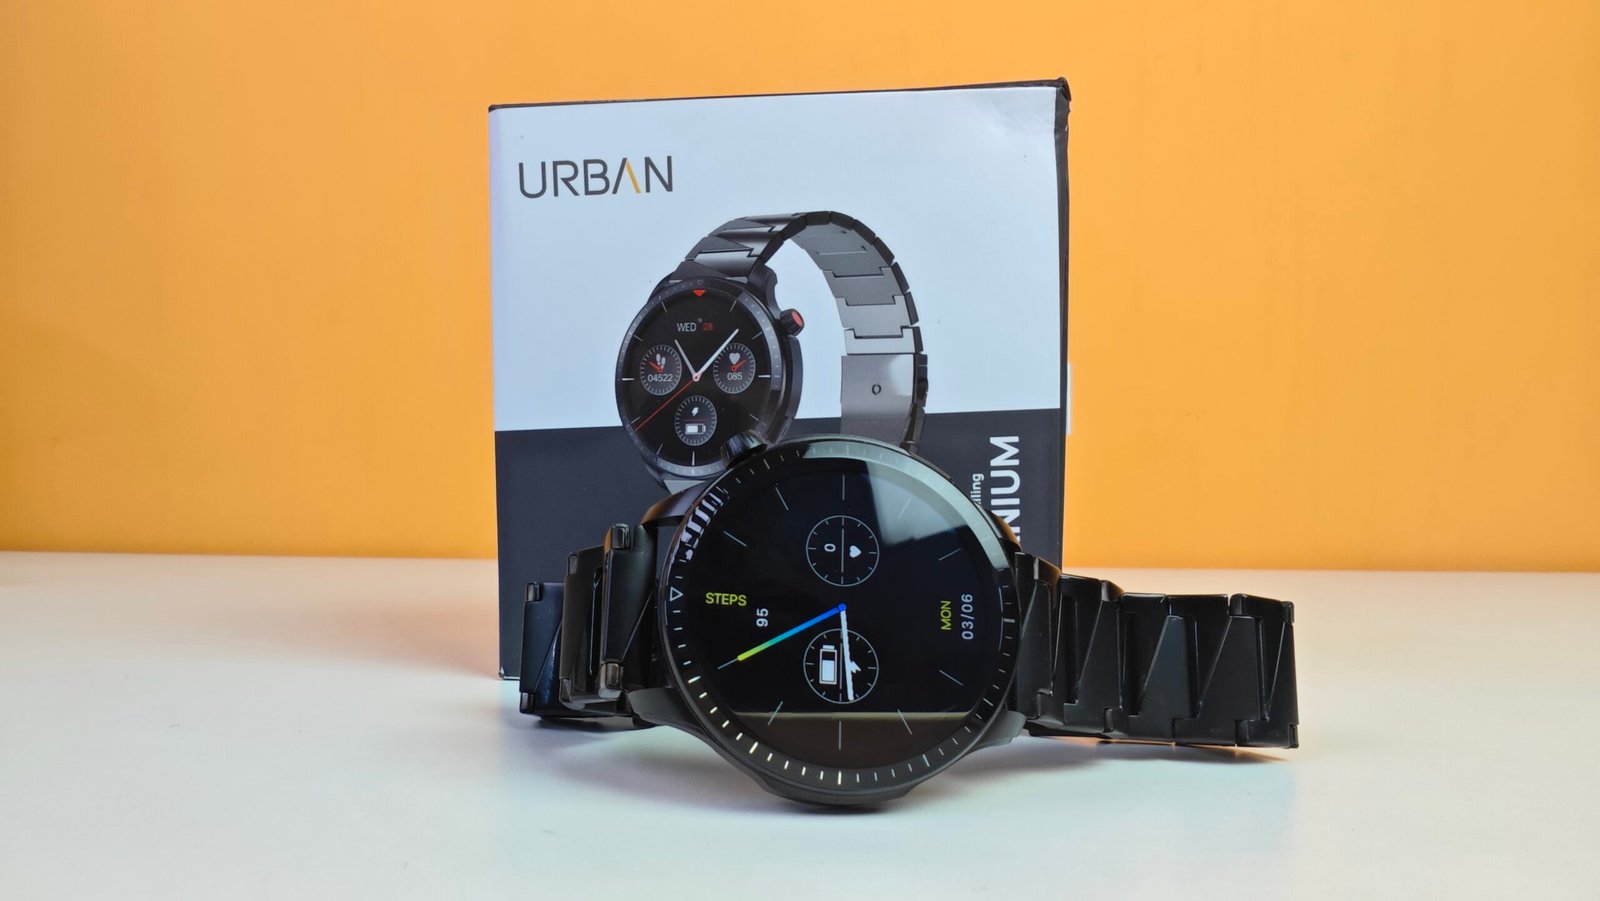 URBAN Titanium USW003 Smartwatch Black: A Stylish and Durable Smartwatch for Men